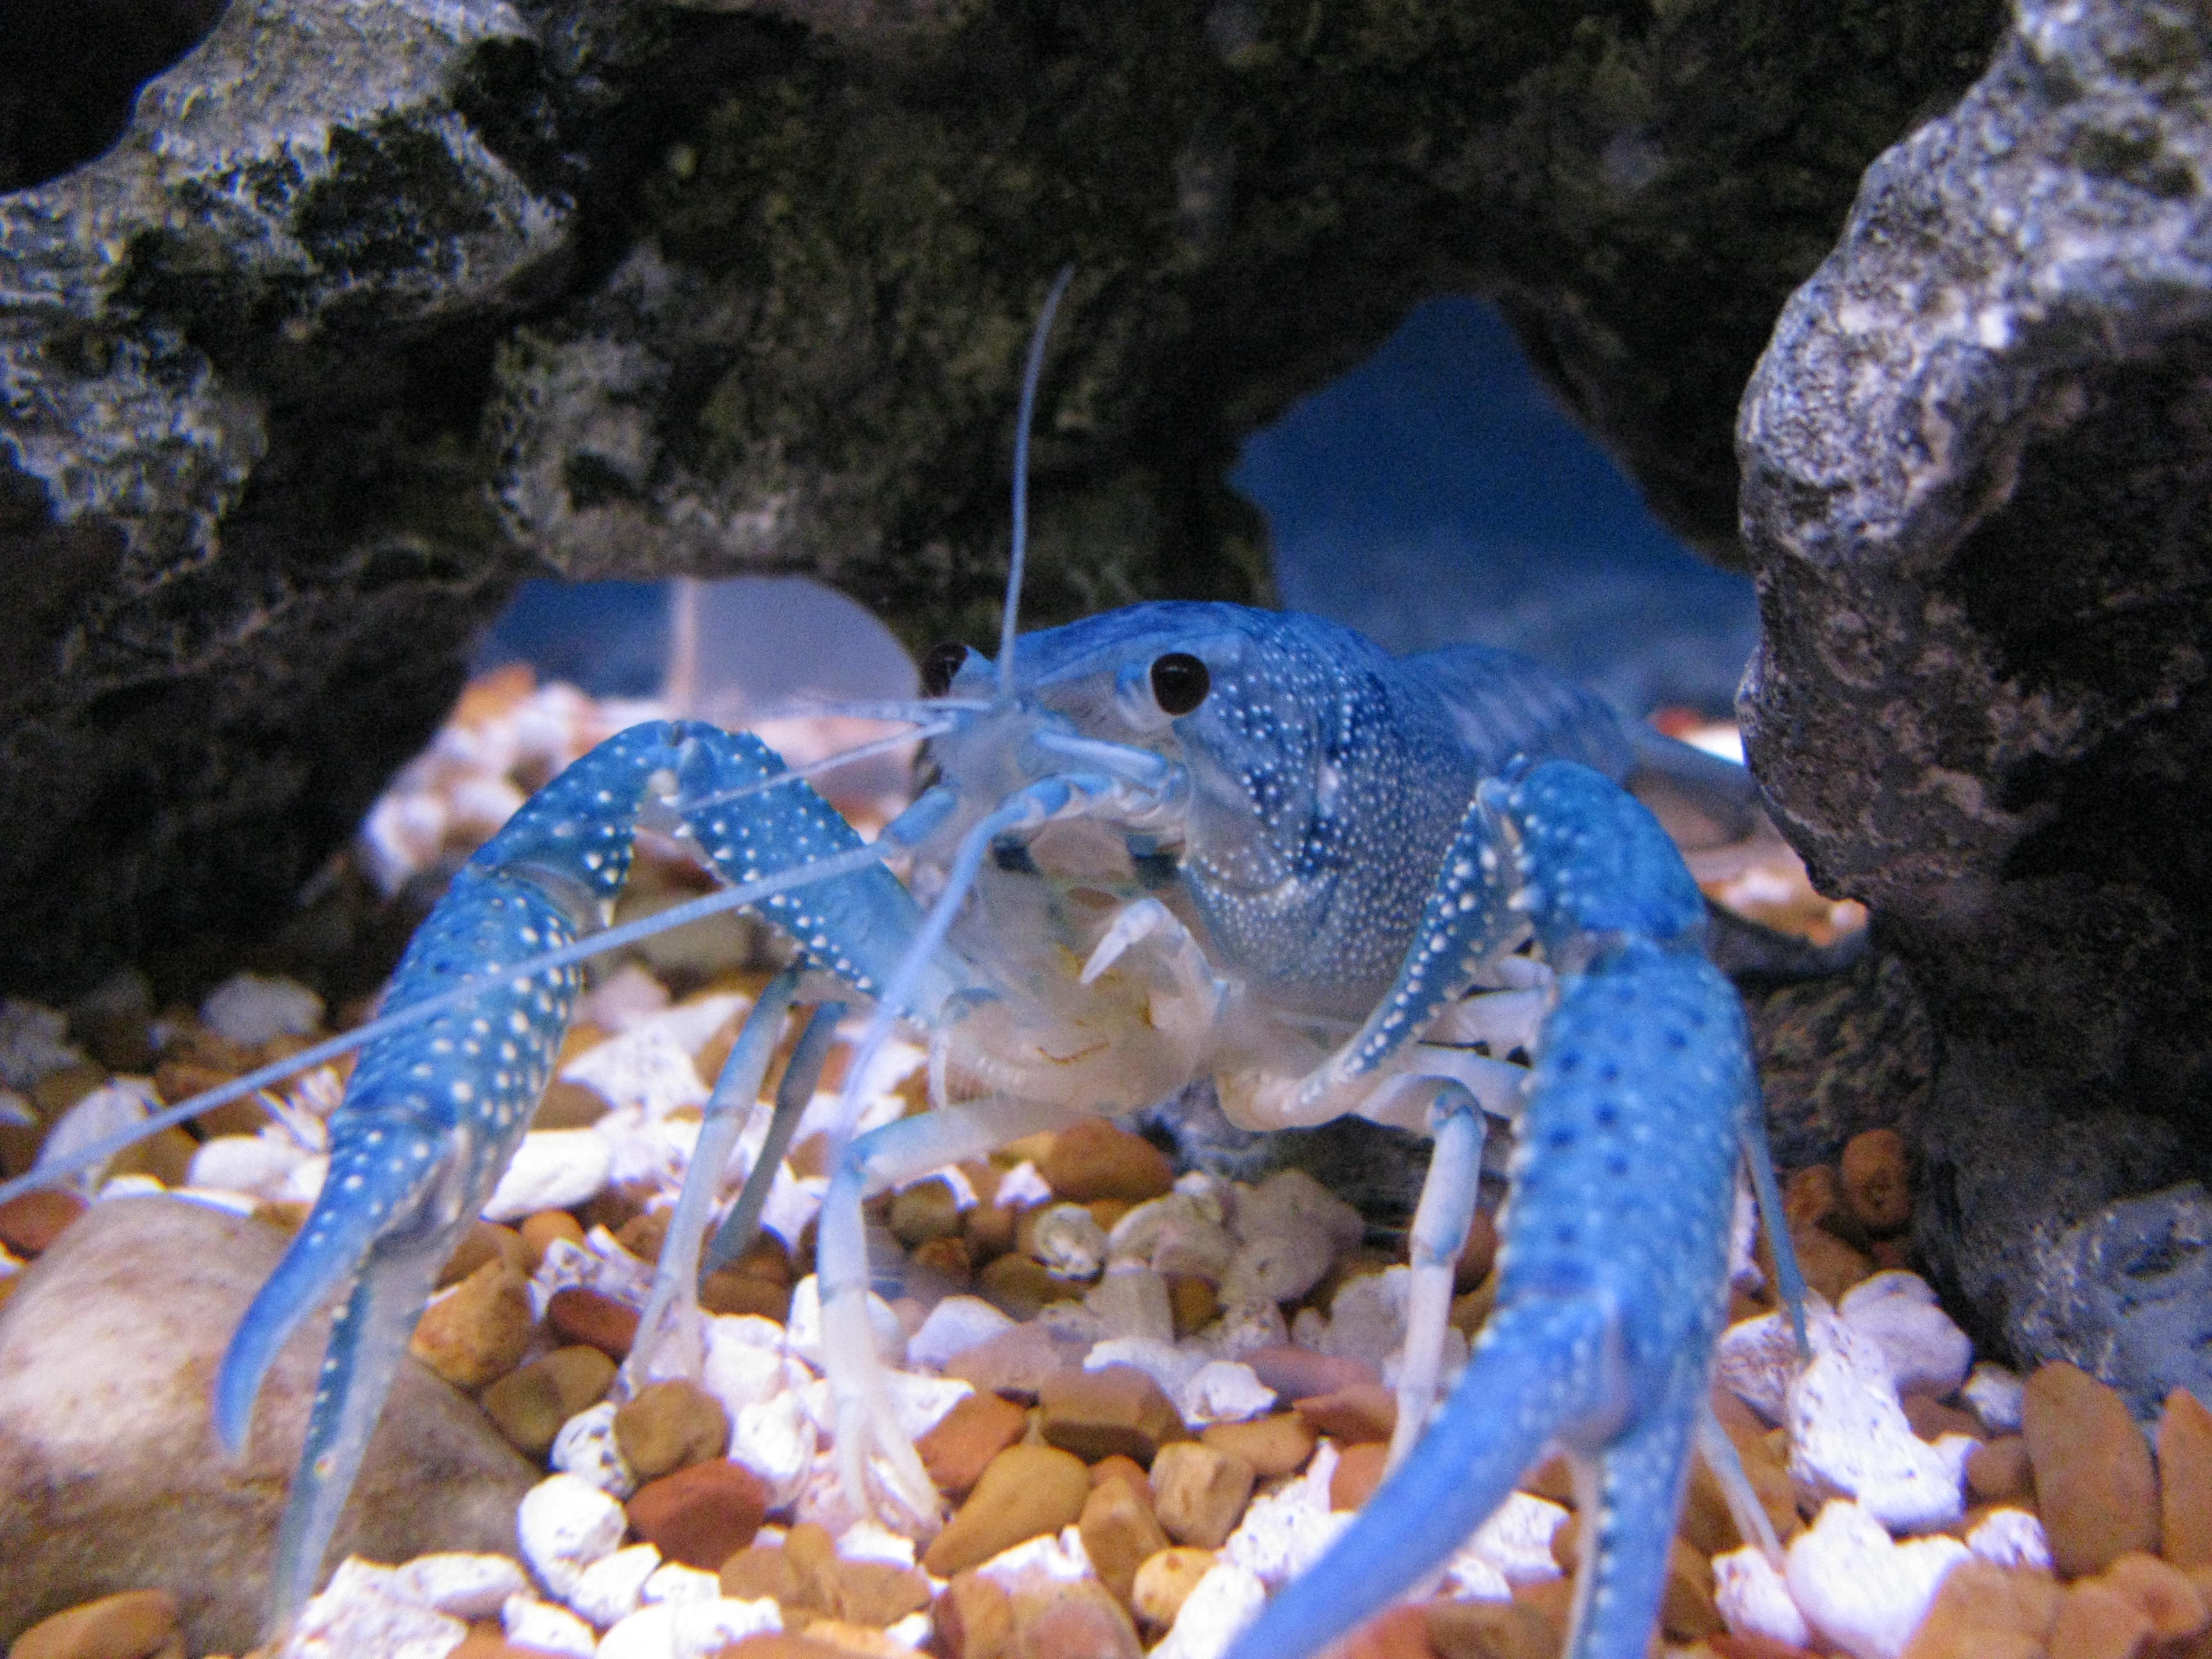 Blue Crayfish in